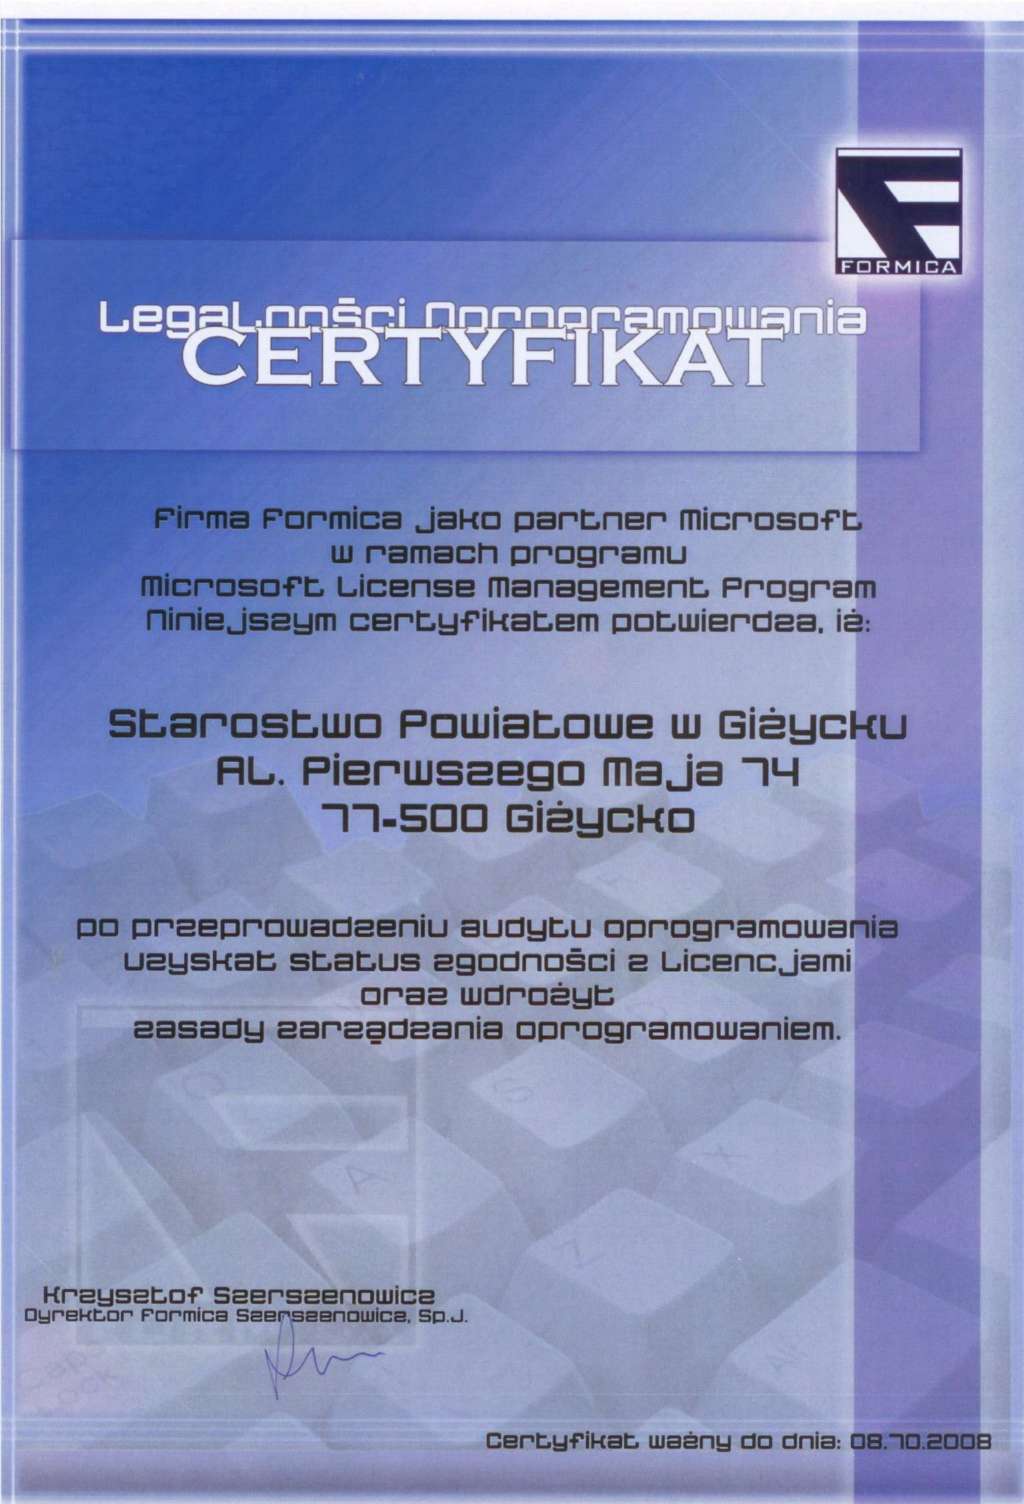 Certyfikat Formica